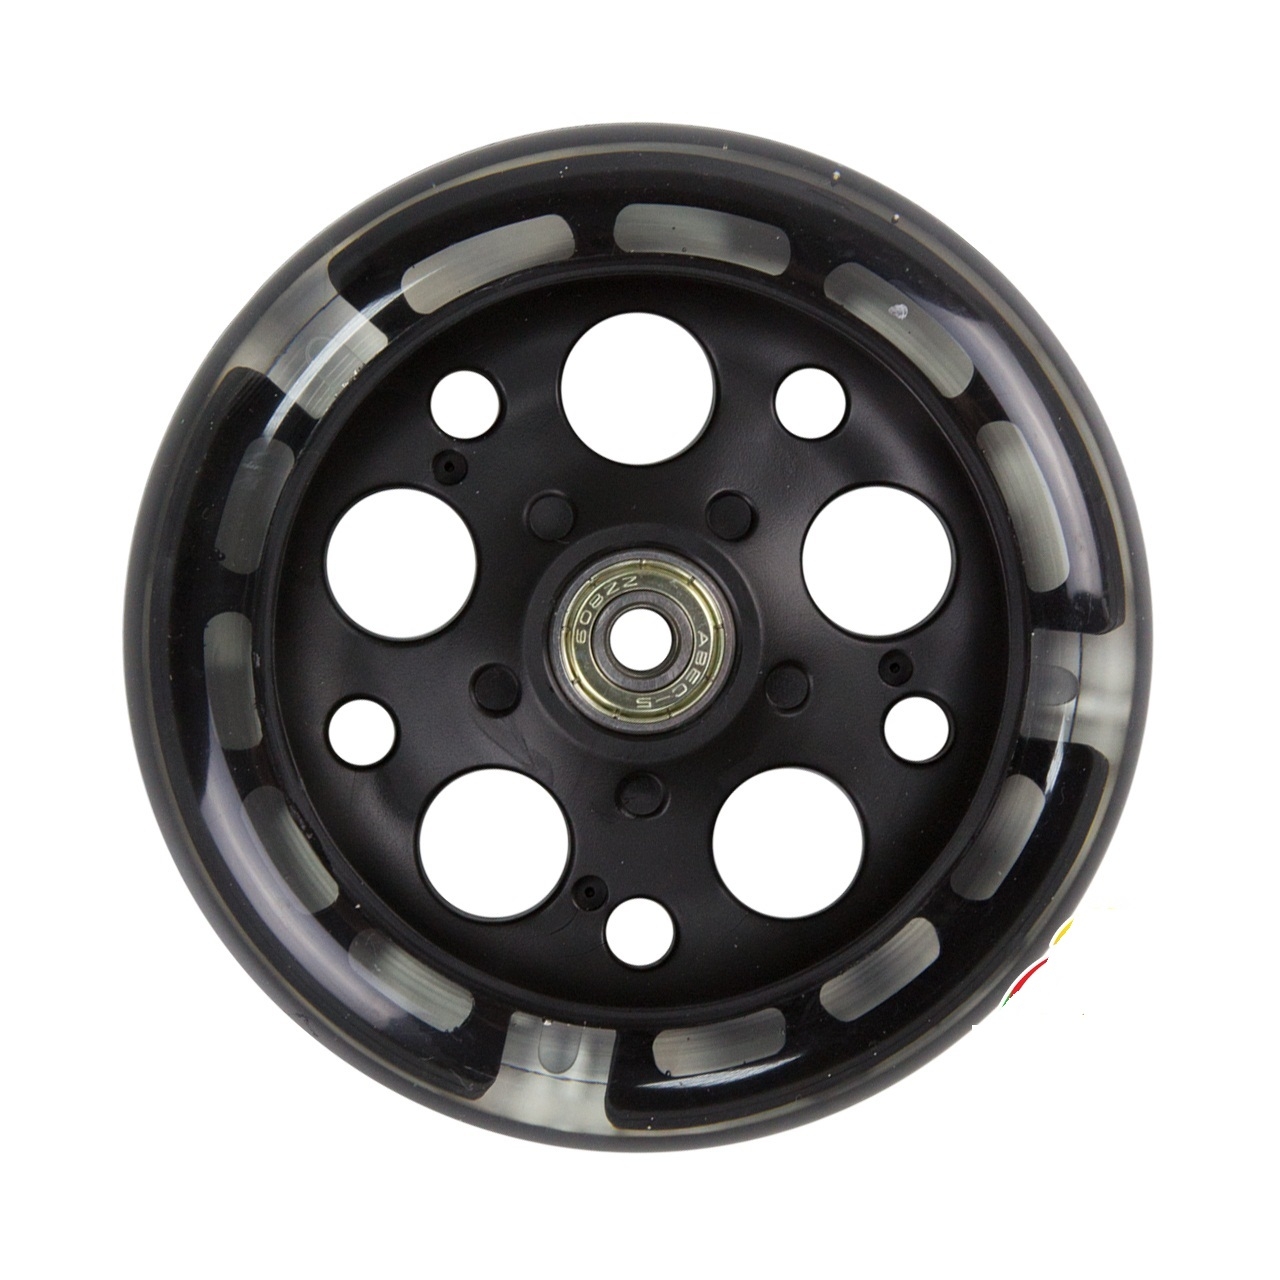 An image of Zycom 125mm Light Up Front Wheel - Black